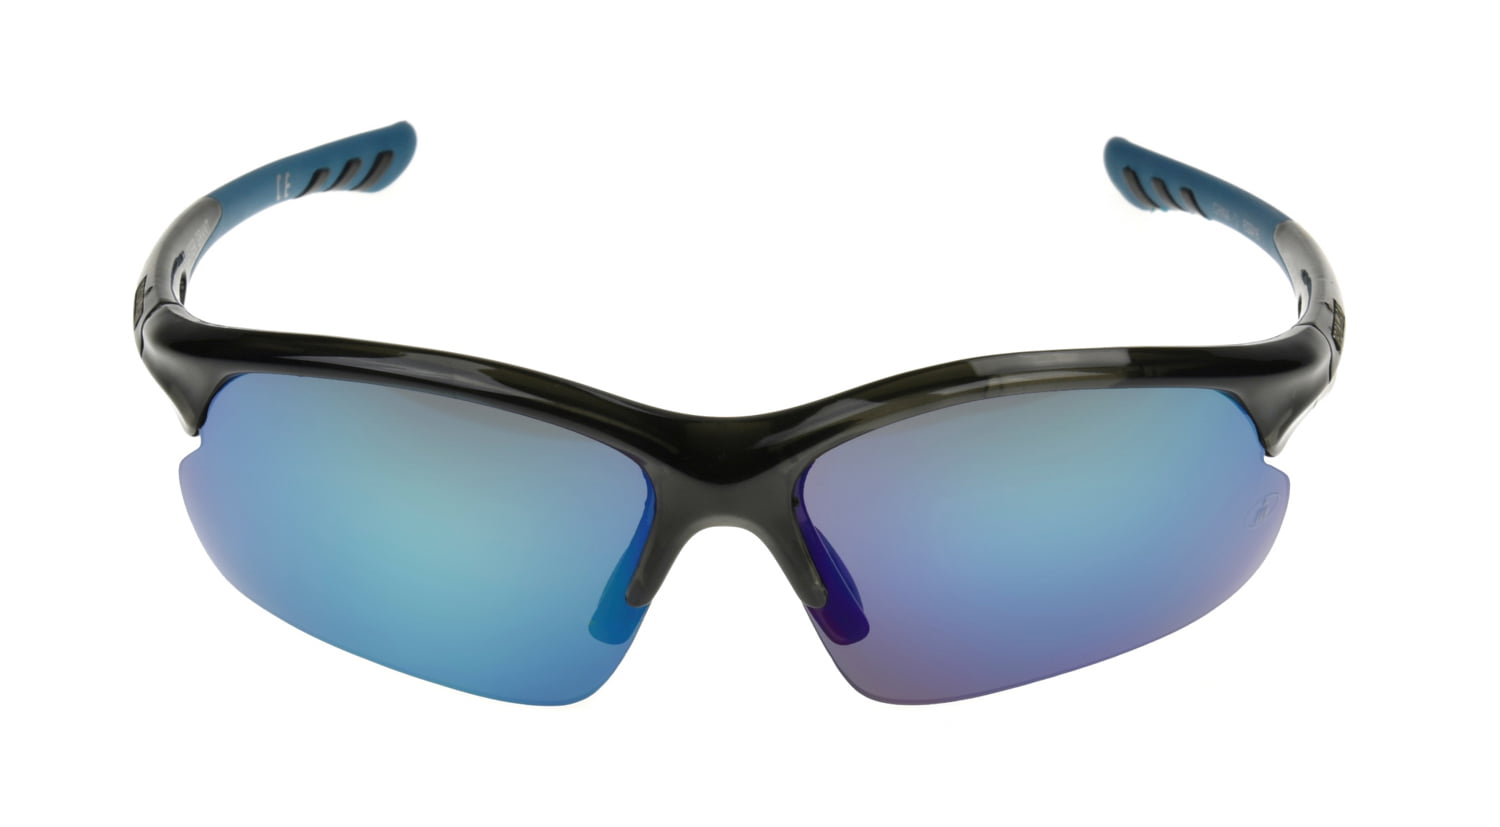 IRONMAN Men's Gray Mirrored Blade Sunglasses QQ04 - Walmart.com